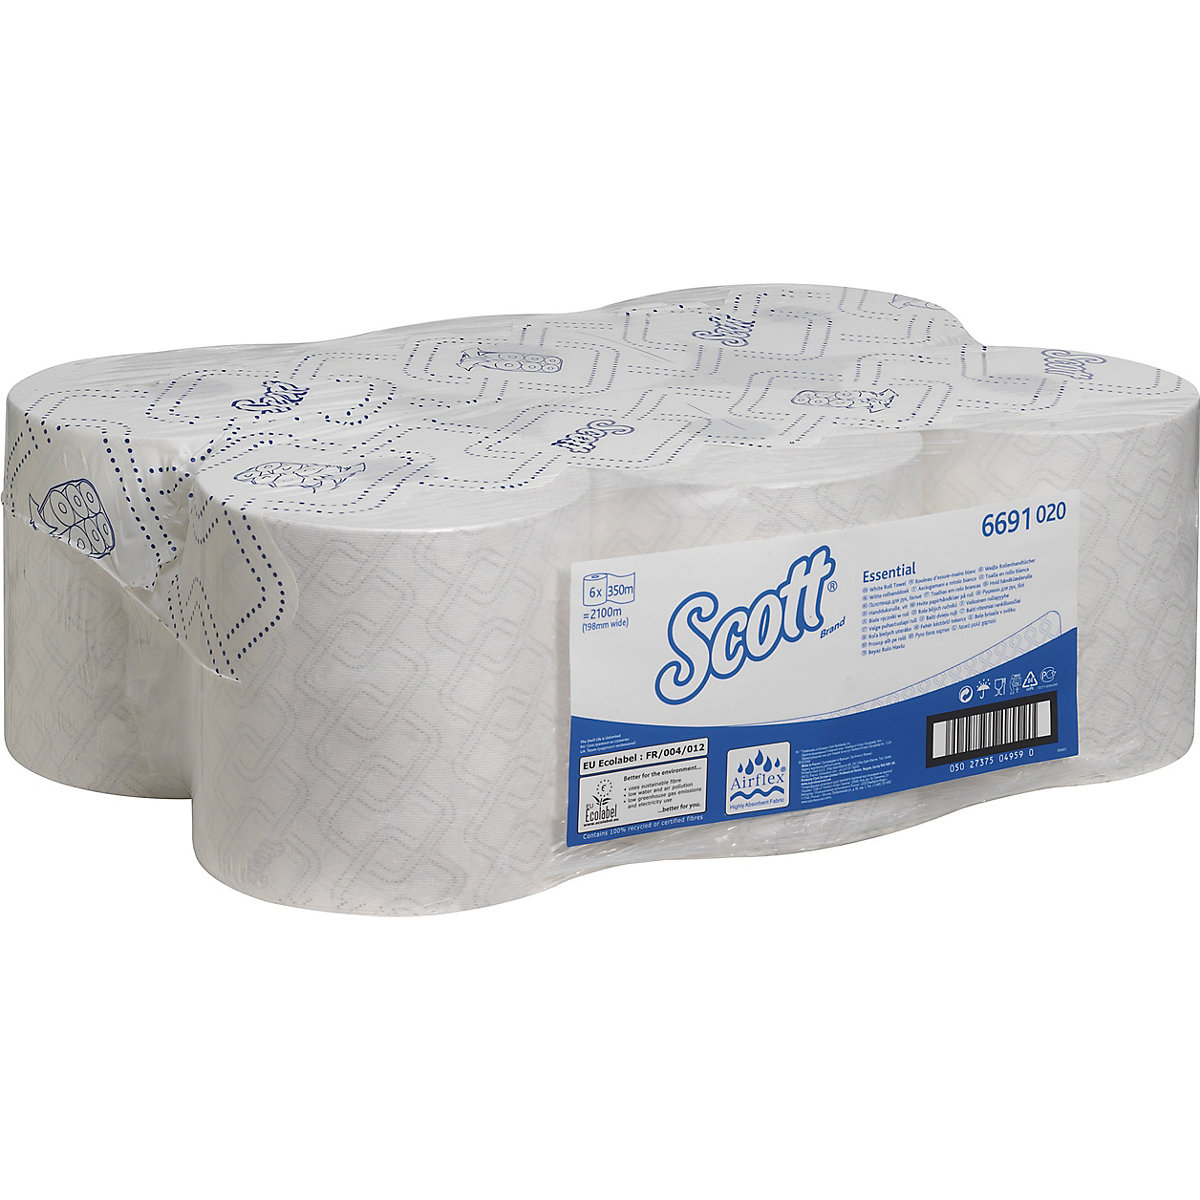 Scott® ESSENTIAL™ paper towels - Kimberly-Clark